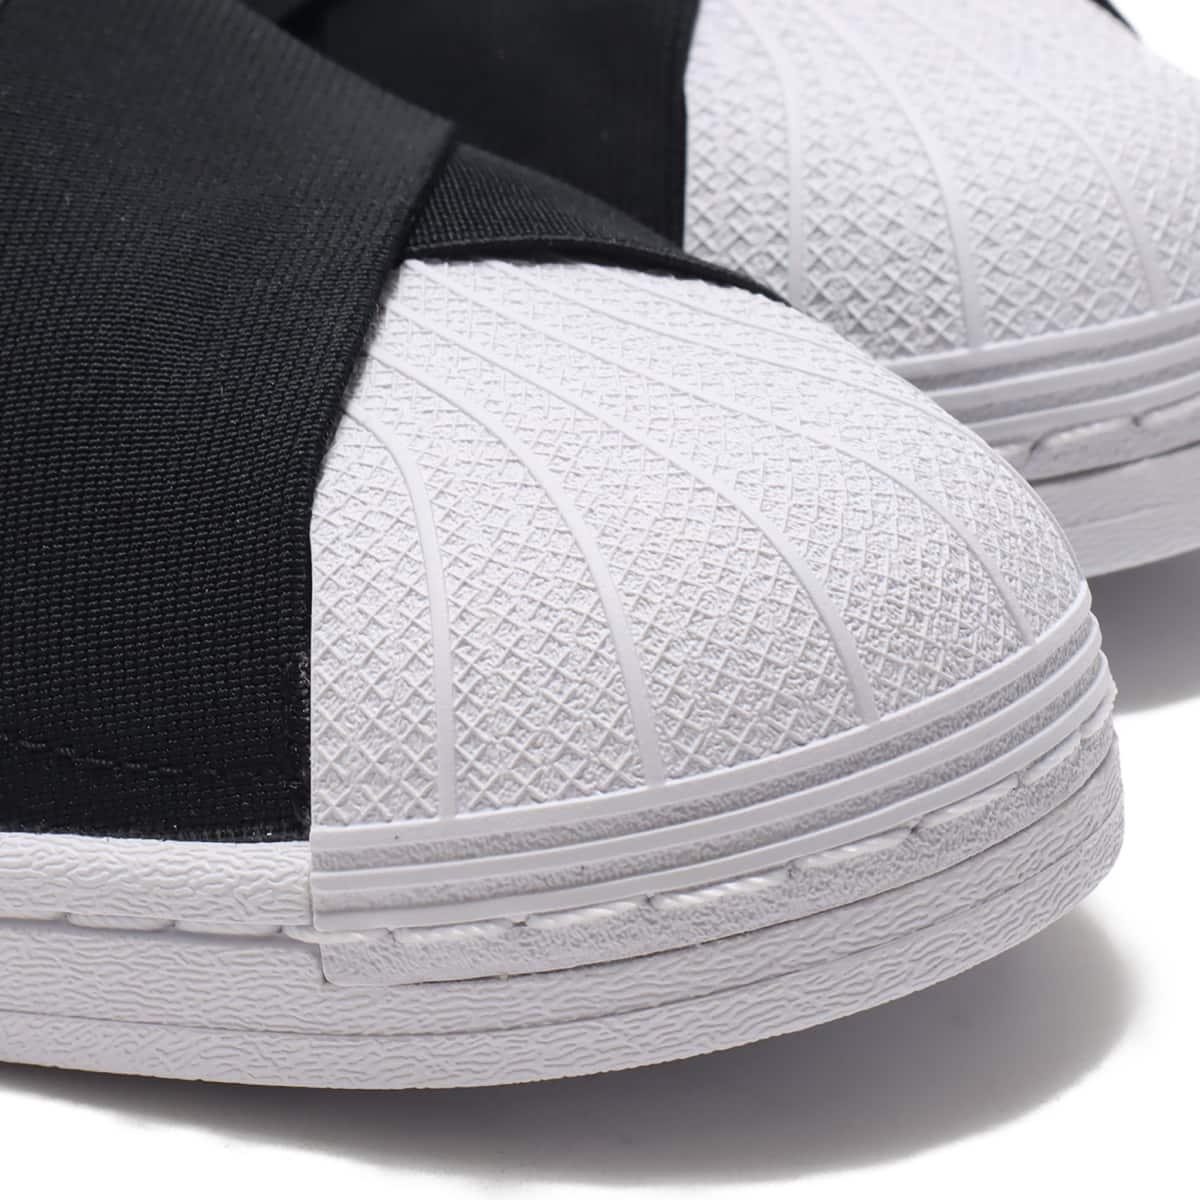 adidas SST SLIP ON CORE BLACK/CORE BLACK/CORE BLACK 20FW-I